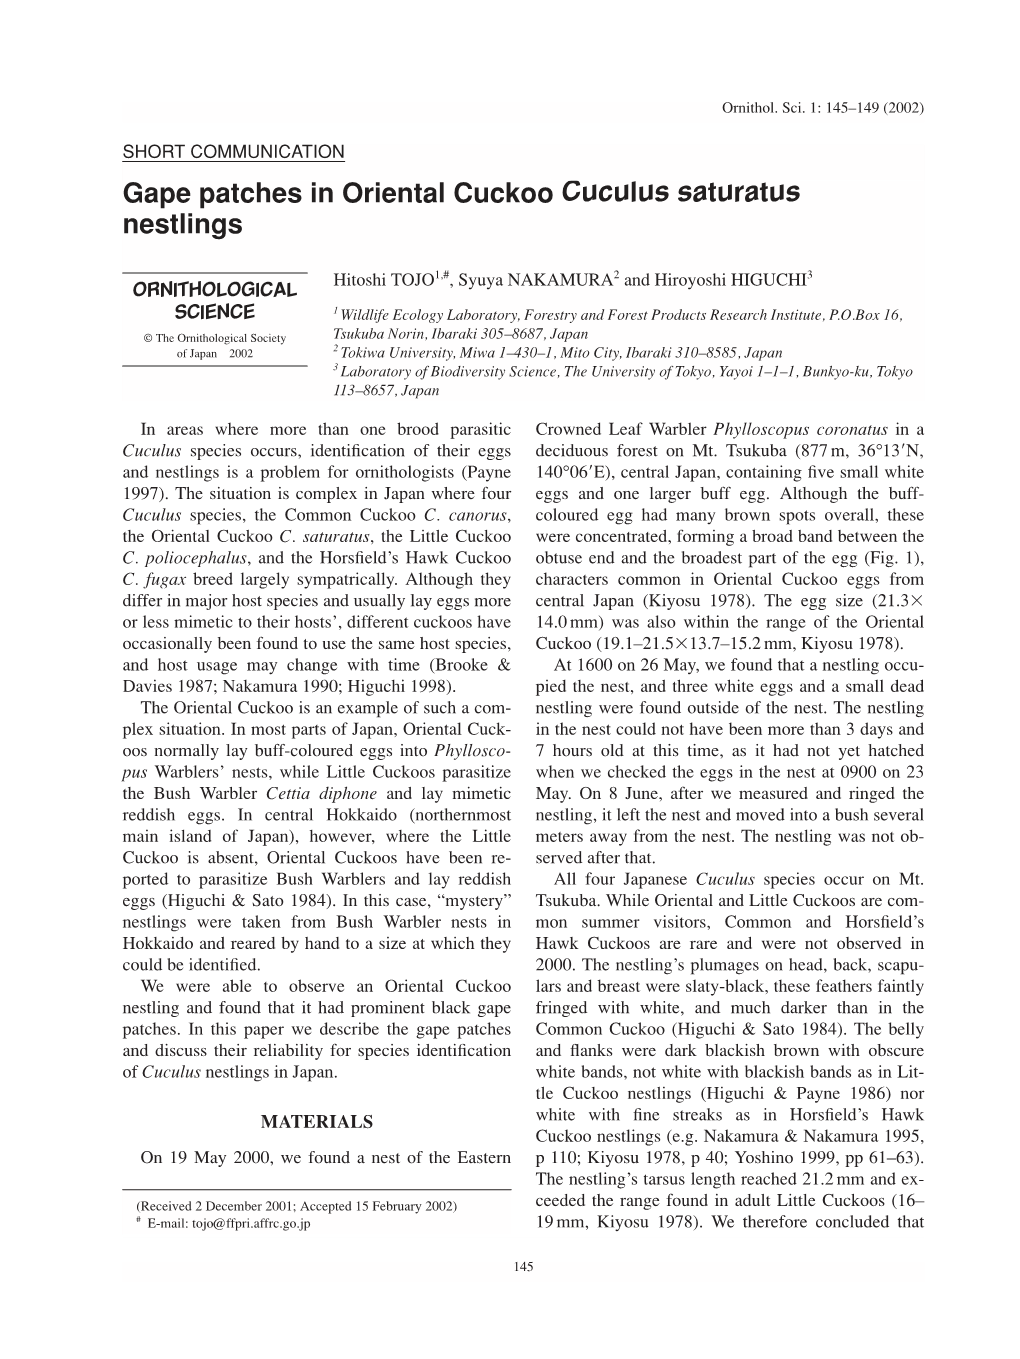 Gape Patches in Oriental Cuckoo Cuculus Saturatus Nestlings